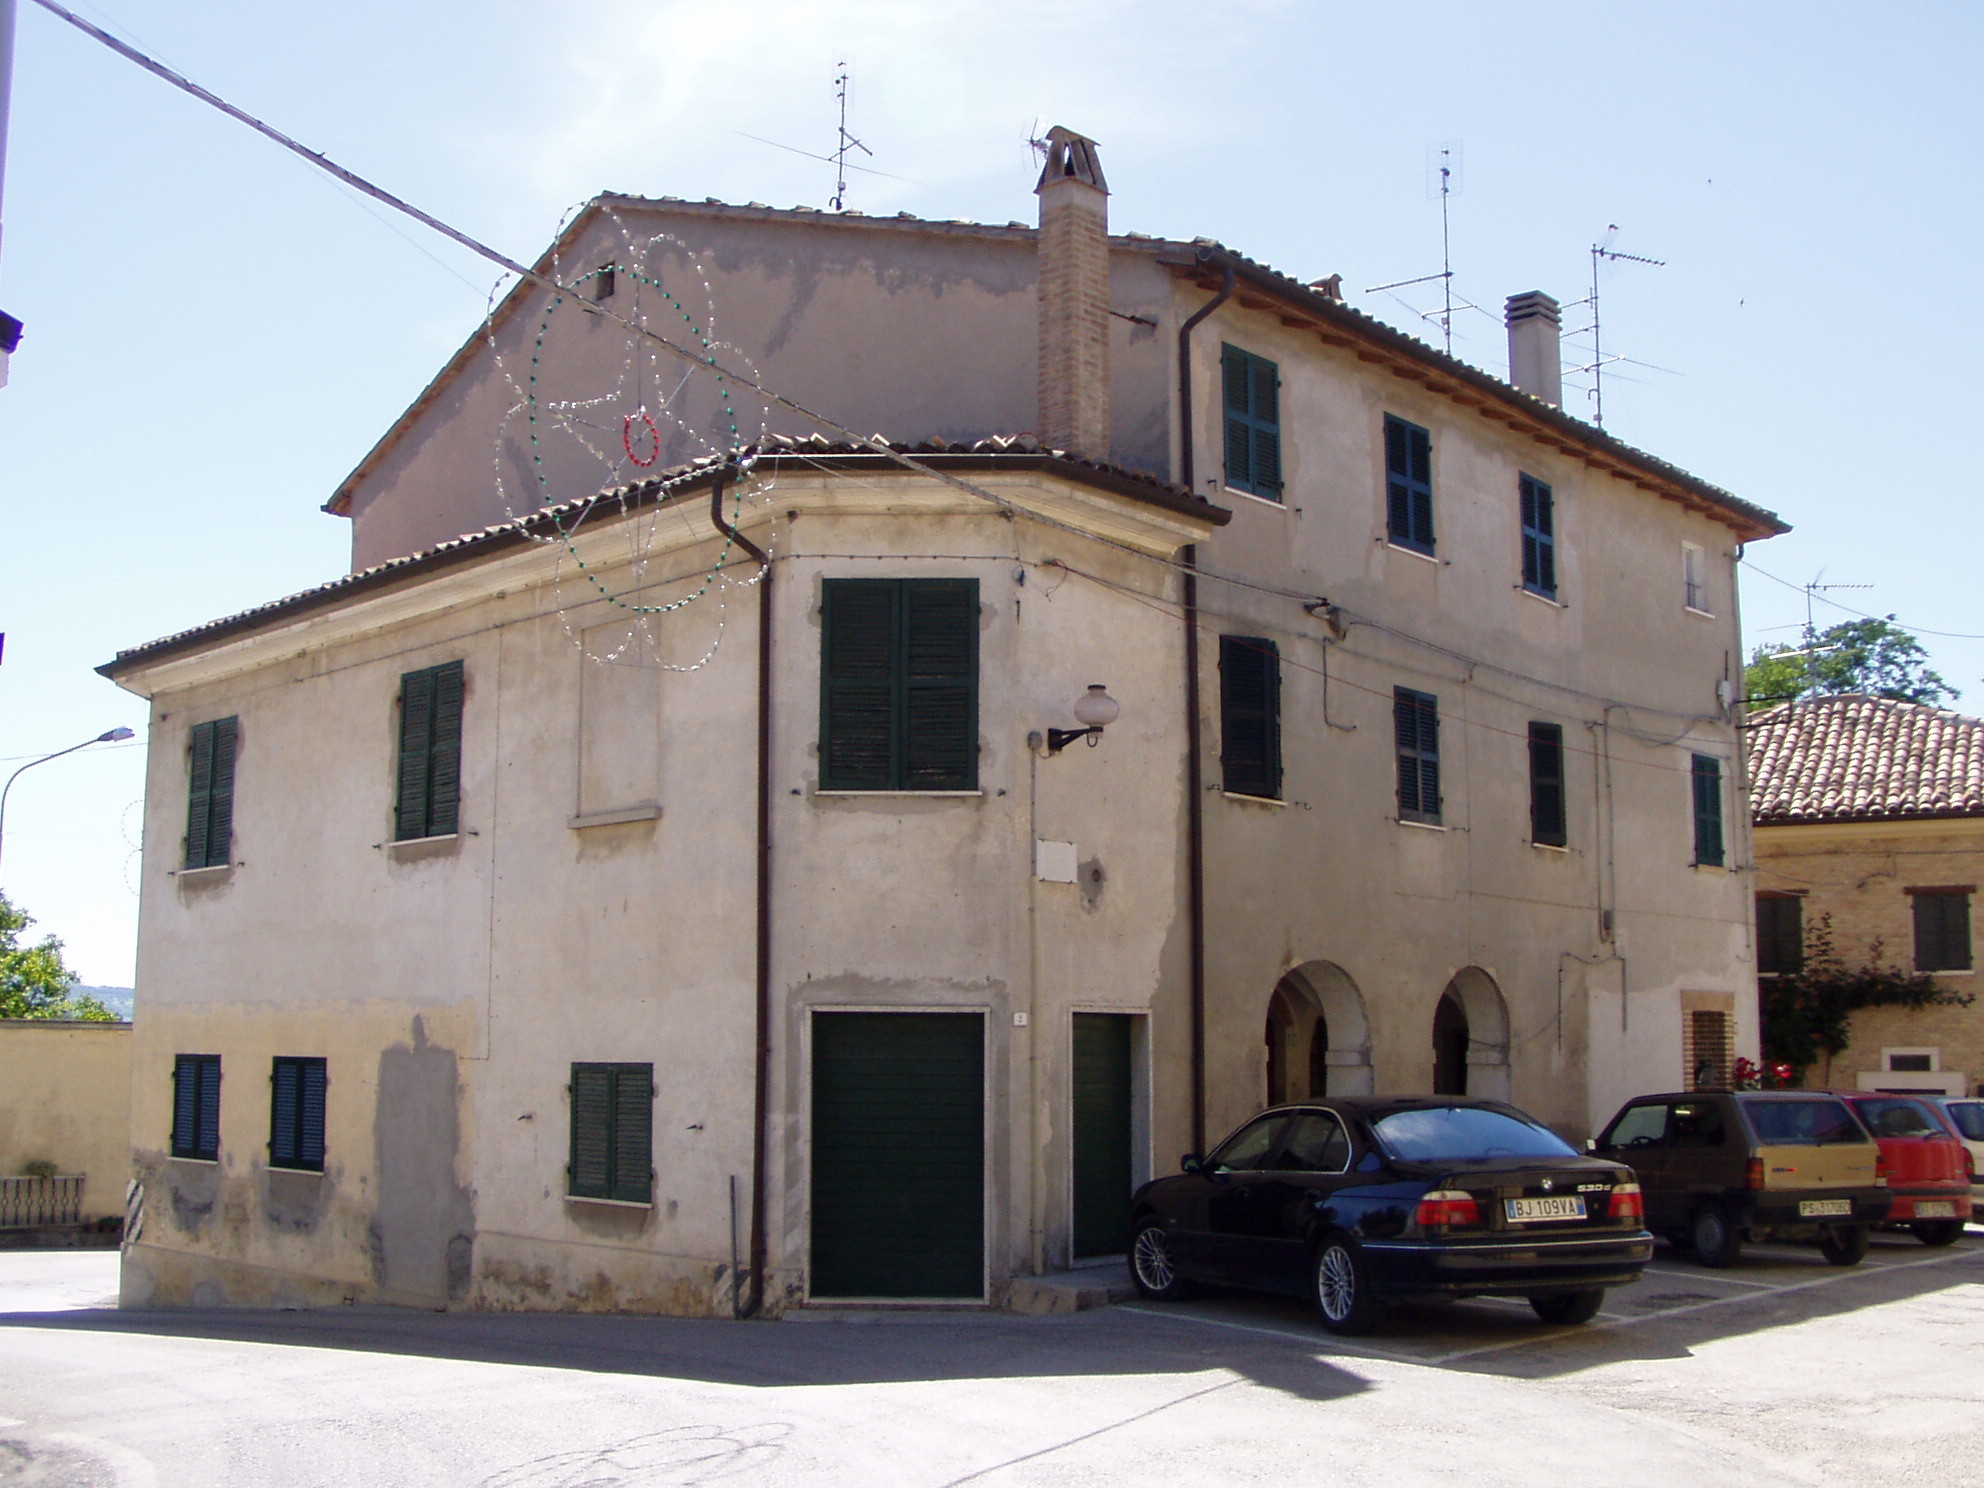 Palazzo nobiliare (palazzo, nobiliare) - Montefelcino (PU) 